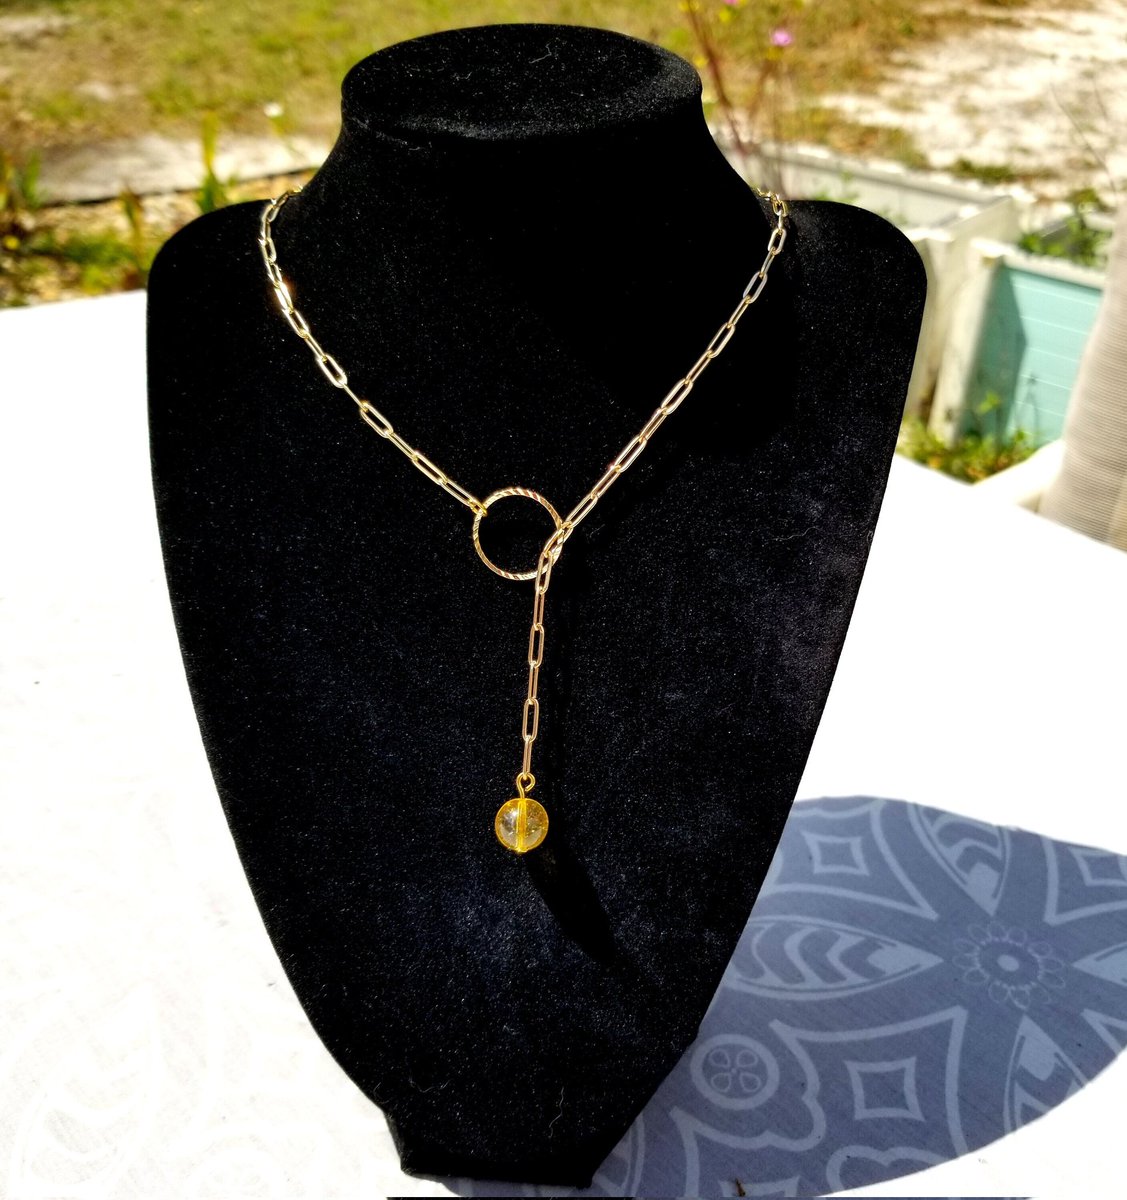 #jewelry #necklace #necklaces #handmade #handmadejewelry #handmadegift #giftsforher #giftideas #gifts #mothersday #mothersdaygifts #lariat #womensfashion #womenstyle #boho #bohostyle #paperclipchain #citrine #citrinenecklace 

simplychicbyangela.etsy.com/listing/168748…